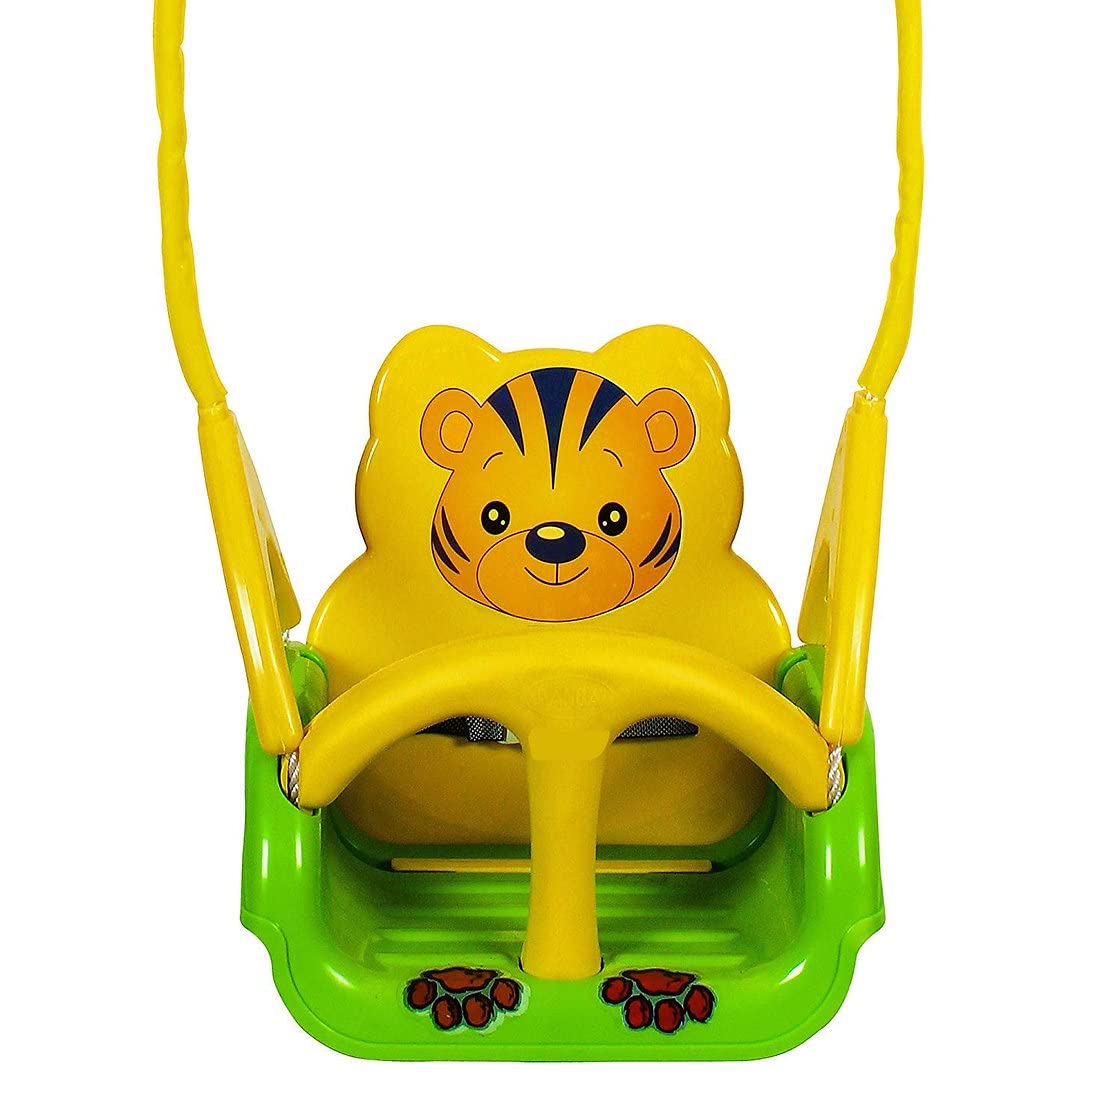 Panda Swing Toy For Kids(Green)